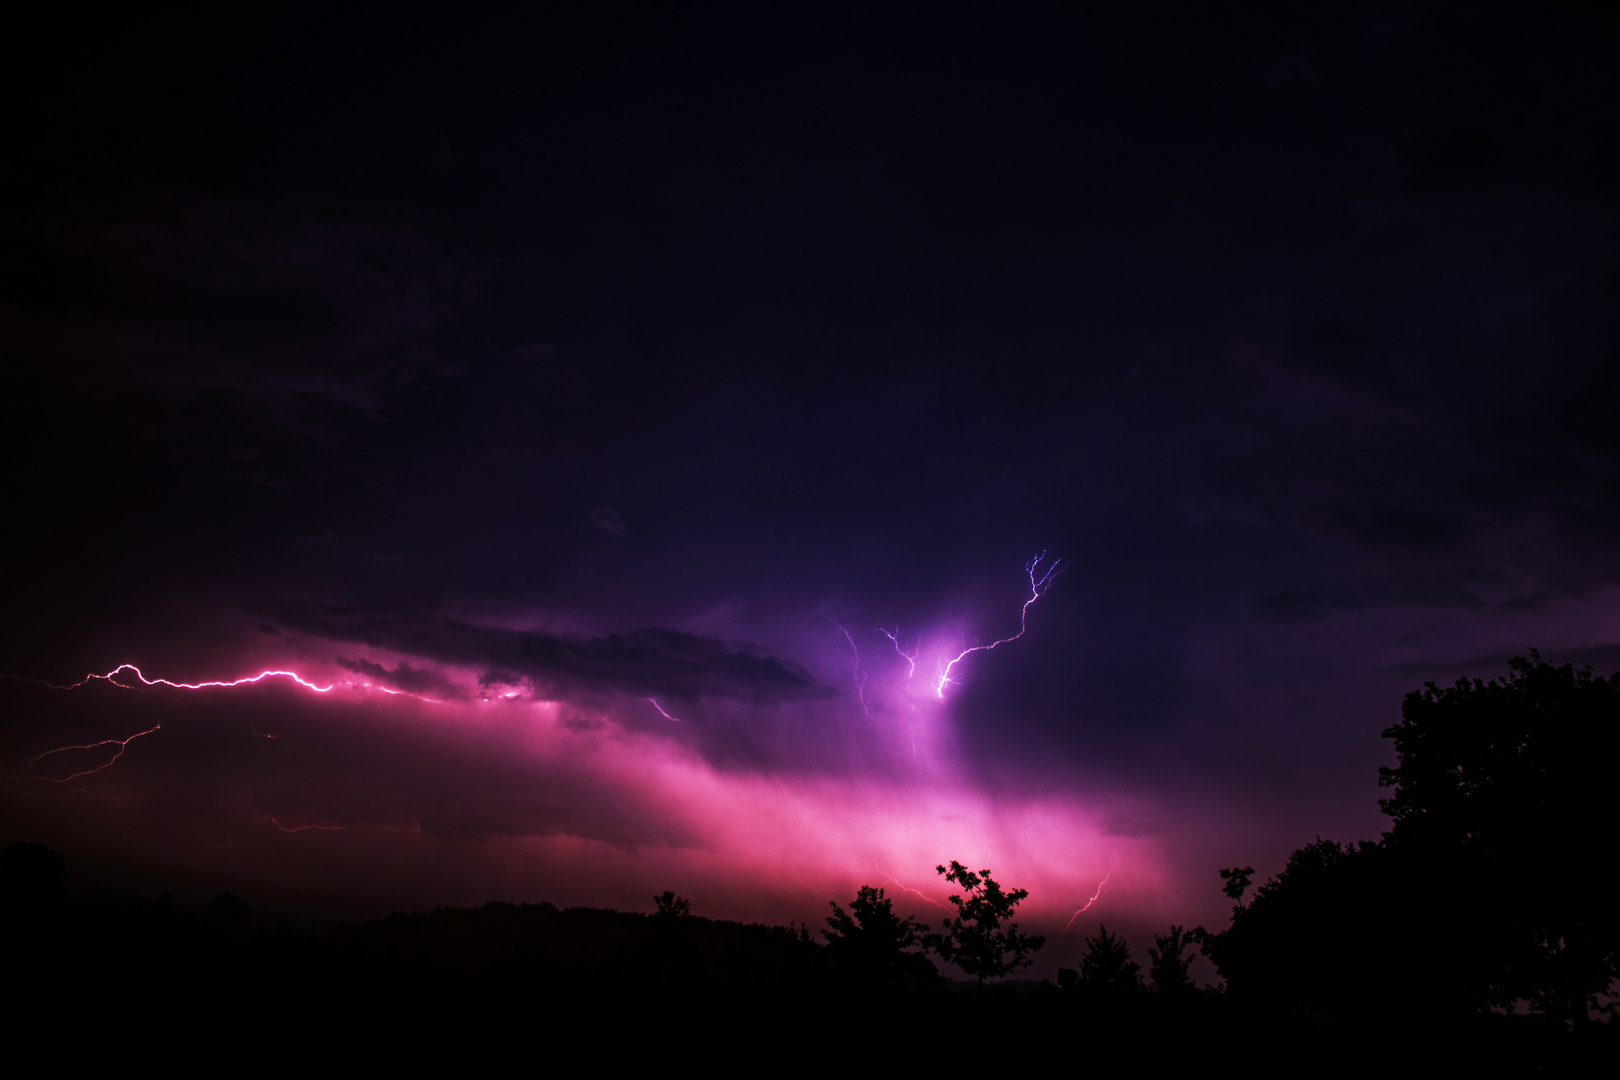 Thunderstorm, Rosendahl, Germany, 06-06-2014 III